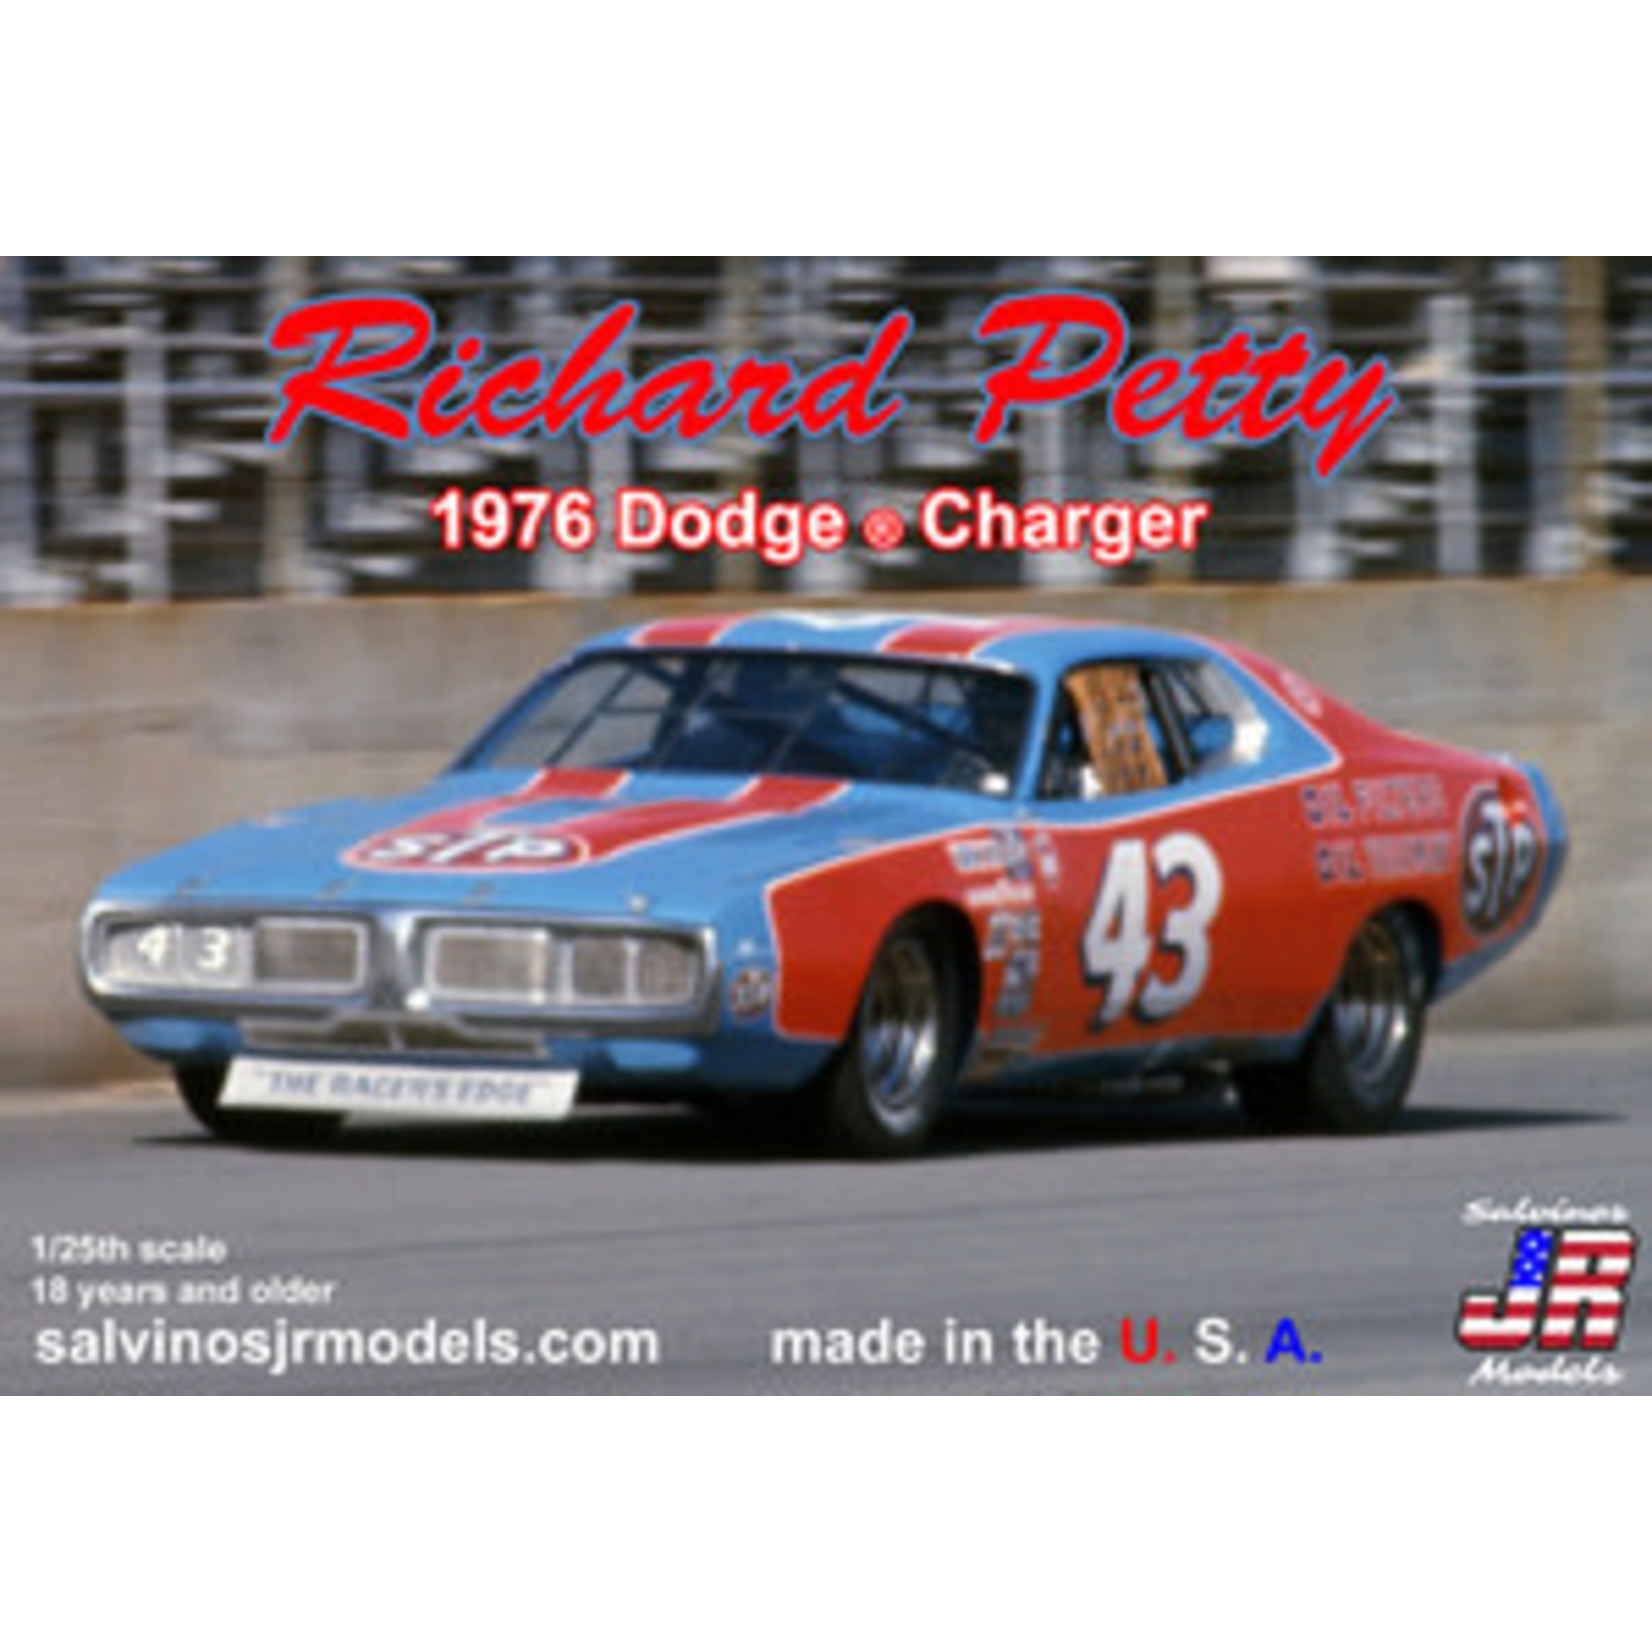 Salvinos Jr Models 1/24 Richard Petty 1976 Dodge Charger Plastic Model Car Kit w/Vinyl Wrap Decals